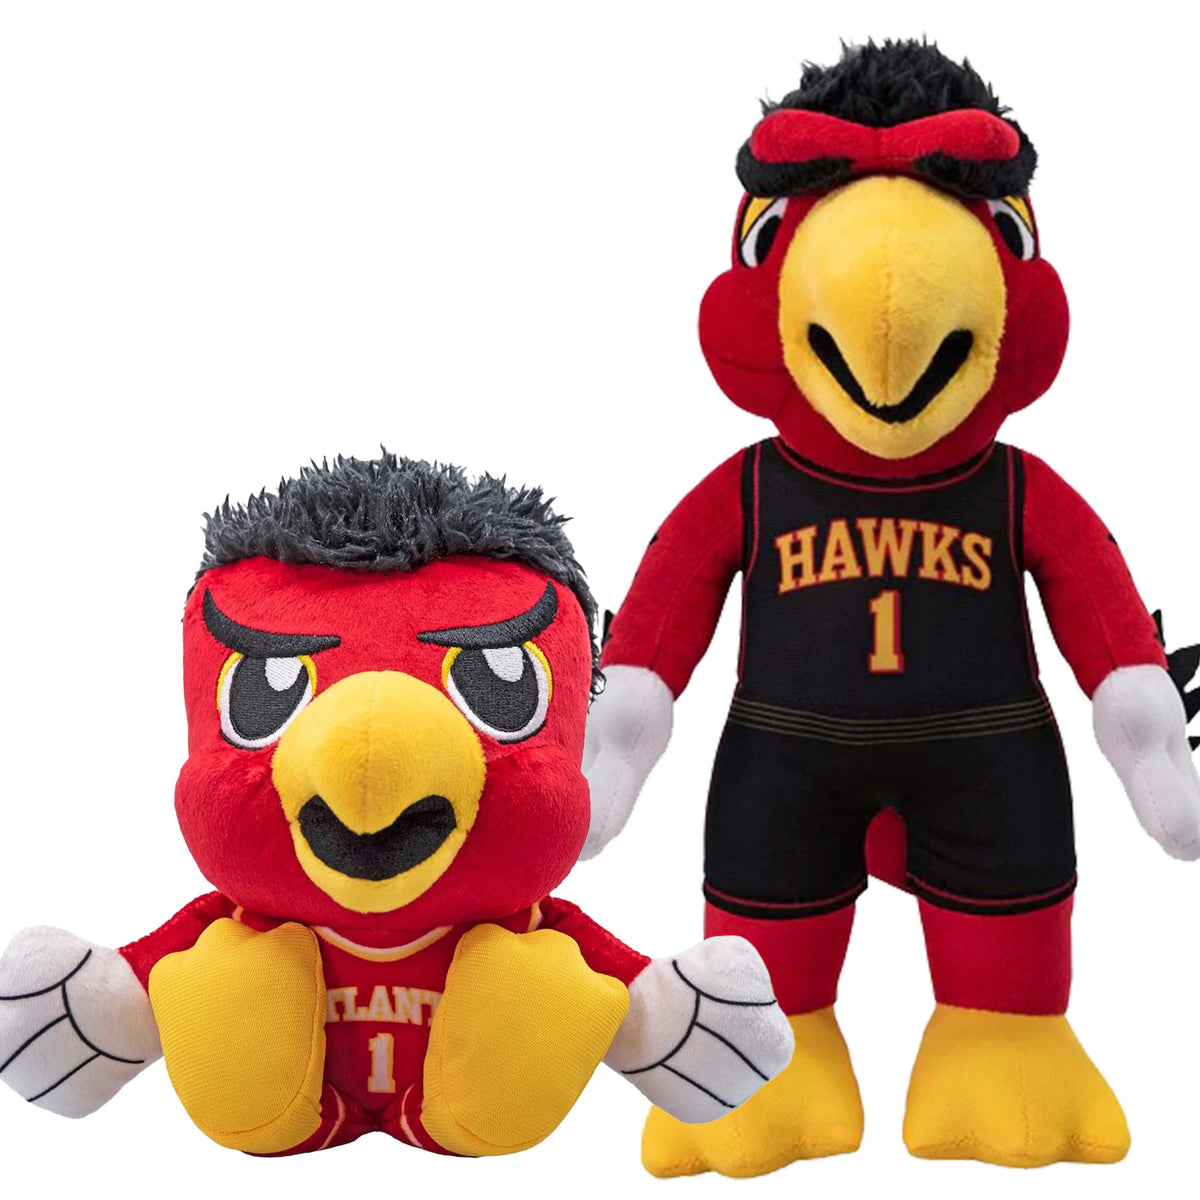 Atlanta Hawks: Harry the Hawk 2022 Mascot - Officially Licensed